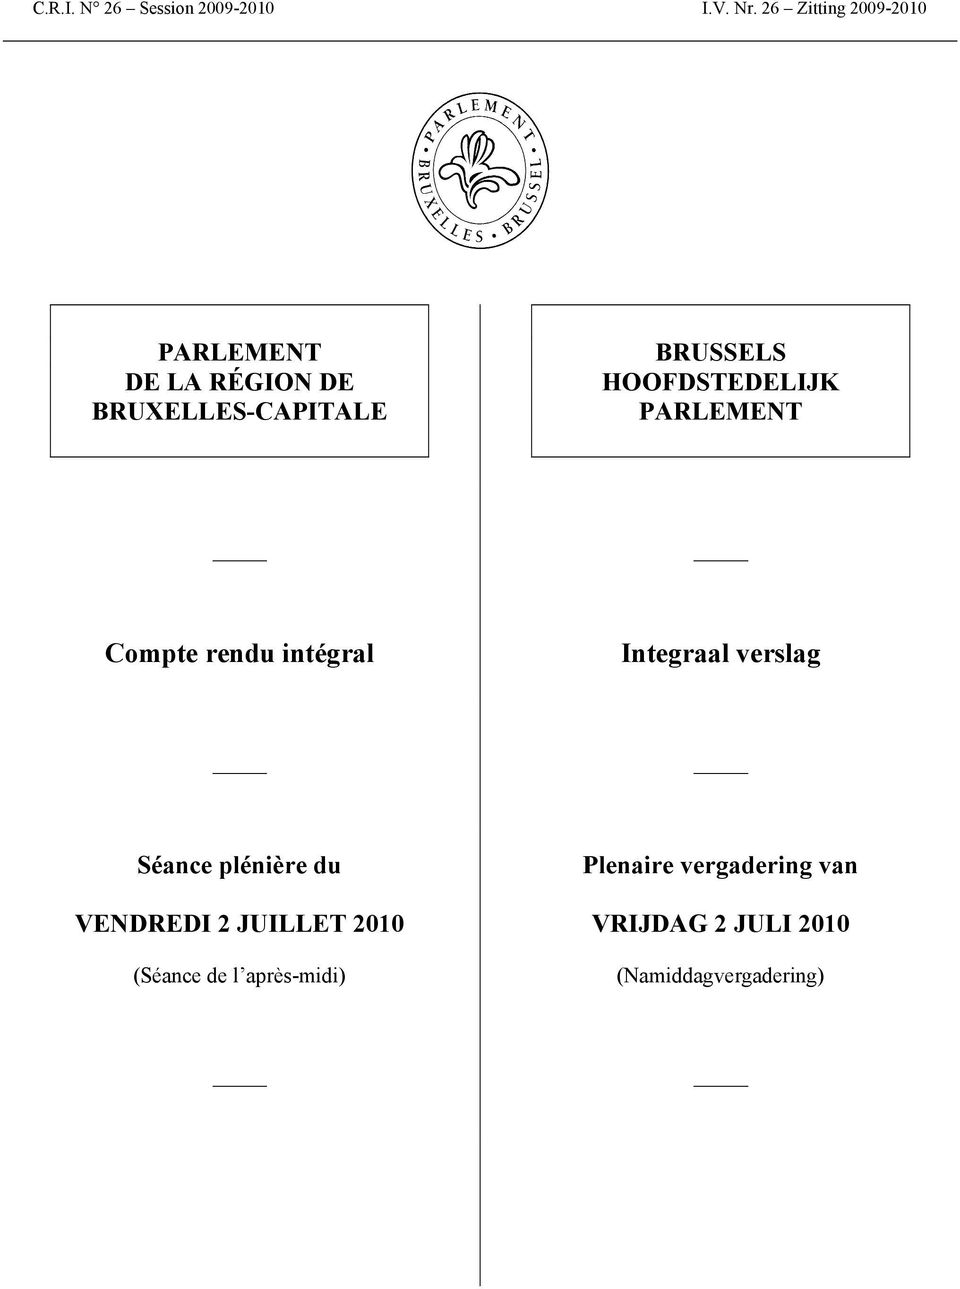 BRUSSELS HOOFDSTEDELIJK PARLEMENT Compte rendu intégral Integraal